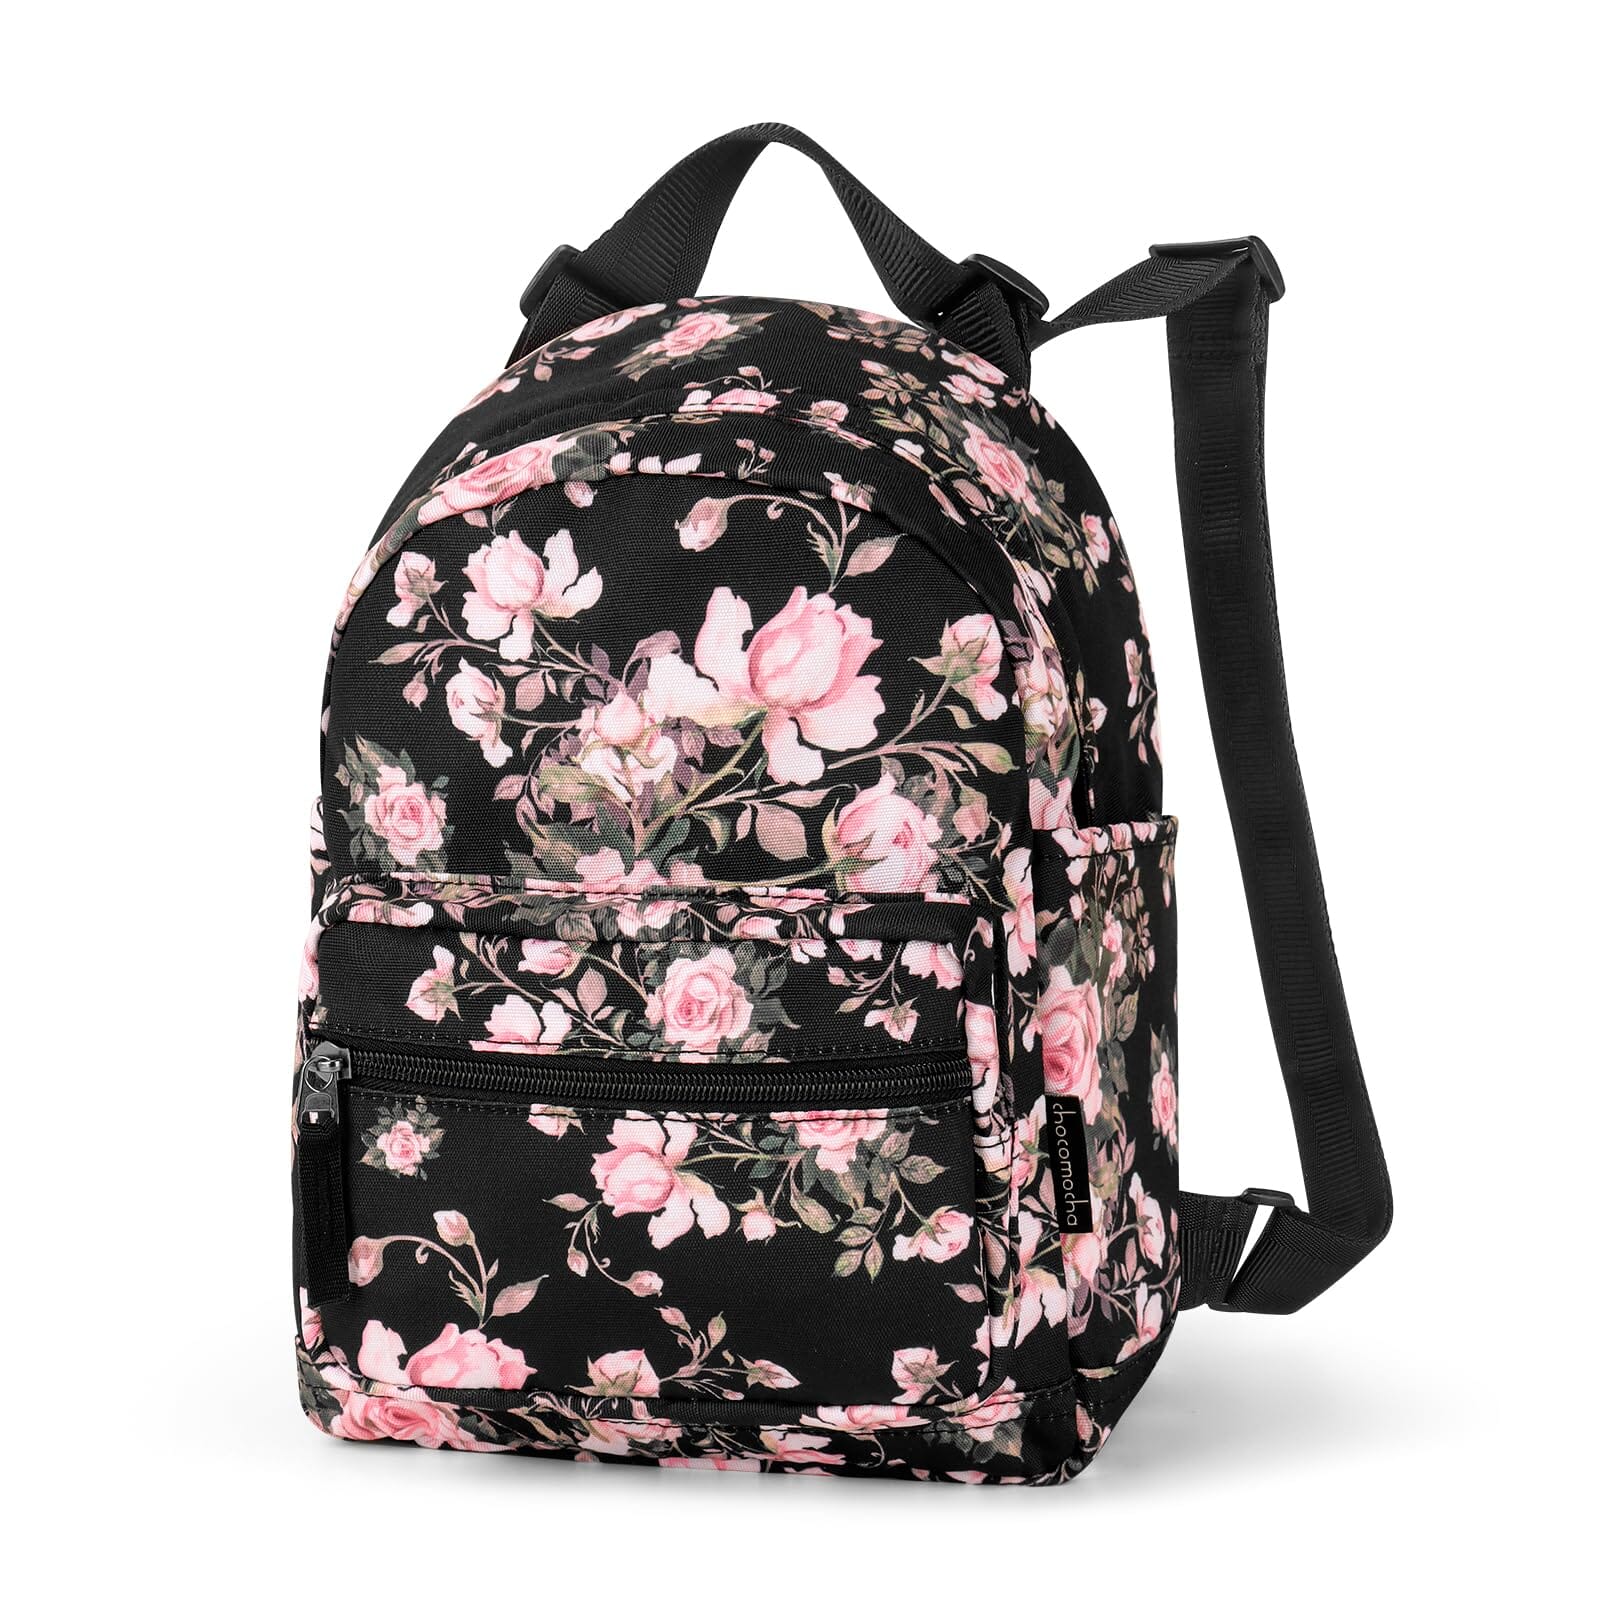 Choco Mocha Black Small Backpack for Girls and Women Teen, Kids Mini Backpack Purse Cute Little Girls Backpack School Travel Bookbag, Flower Floral chocomochakids 